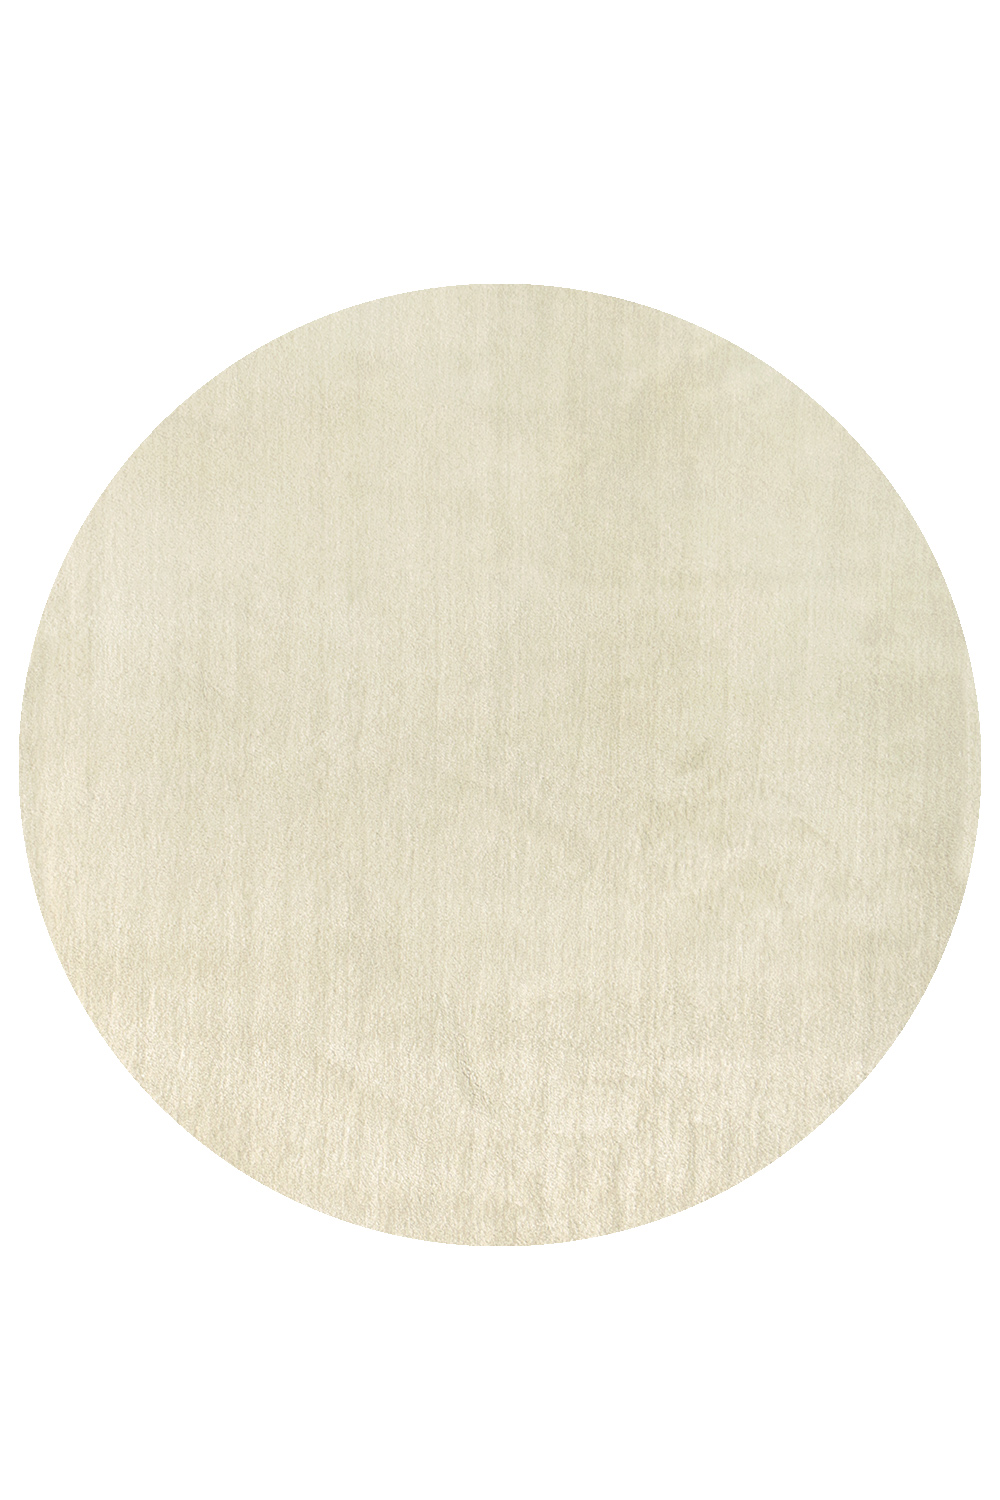 Kusový koberec Labrador 056 Cream - kruh Ø 120 cm